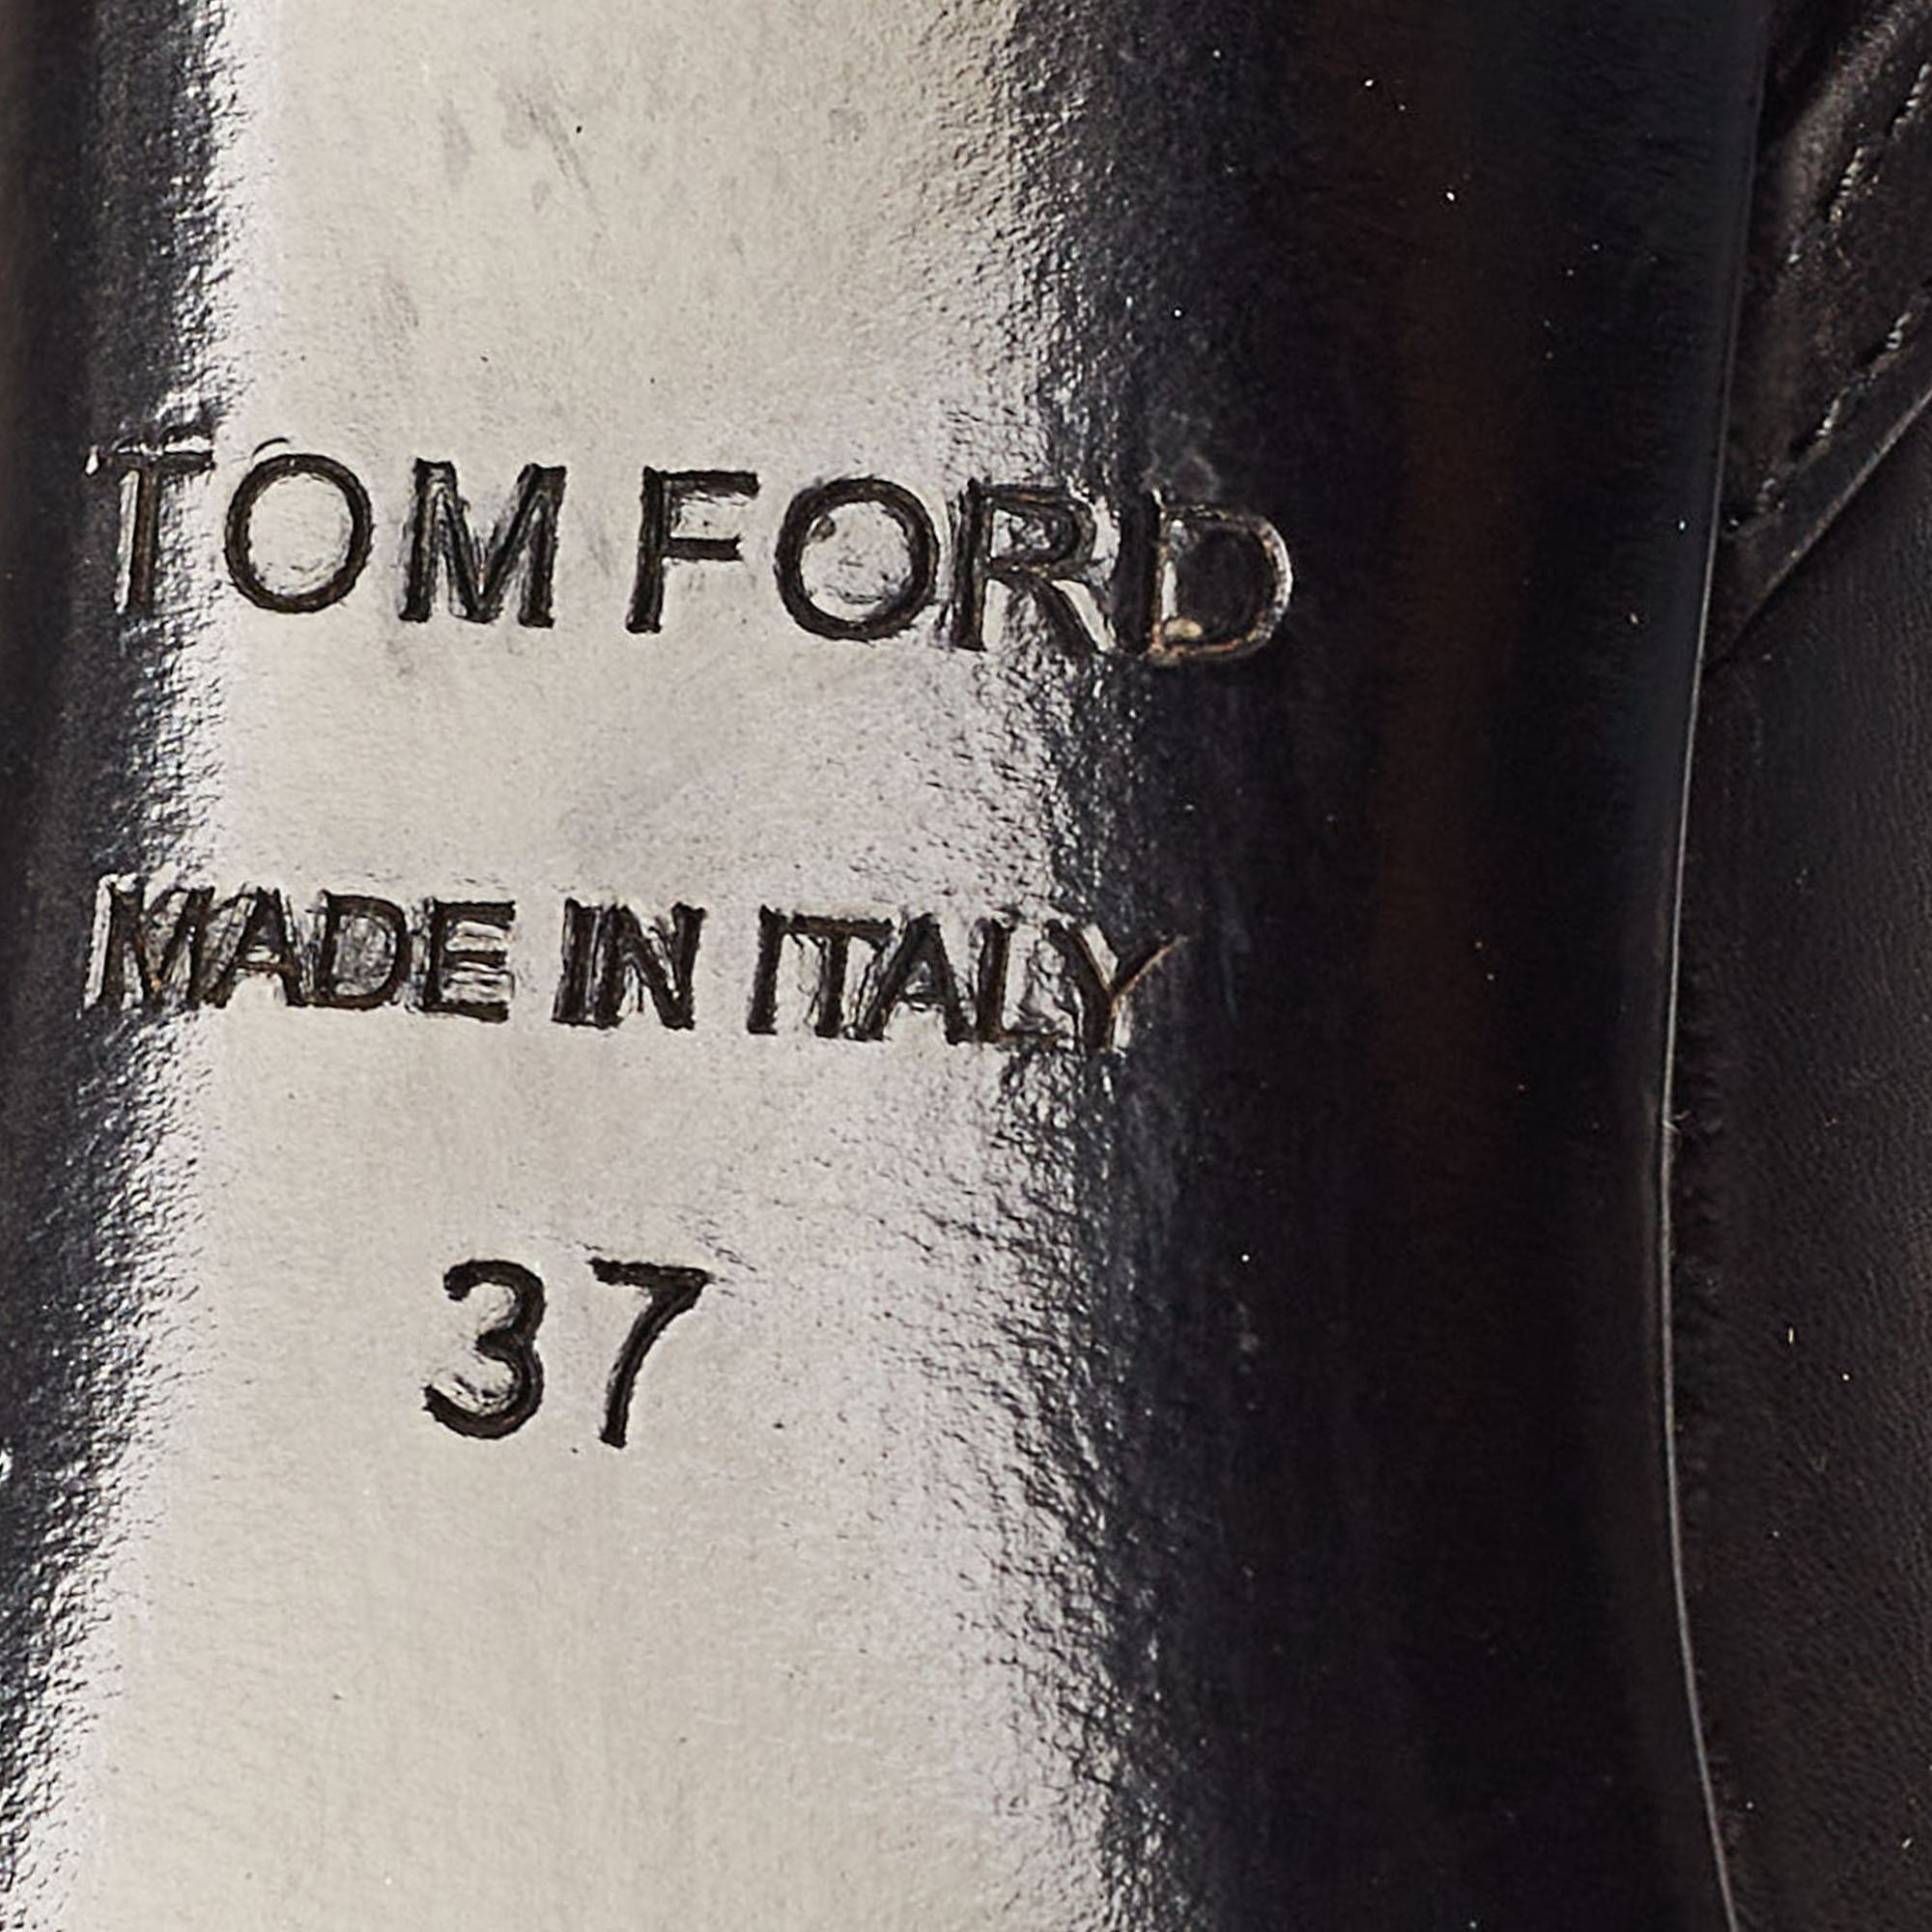 Tom Ford Black Leather Padlock  Ankle Strap Sandals Size 37